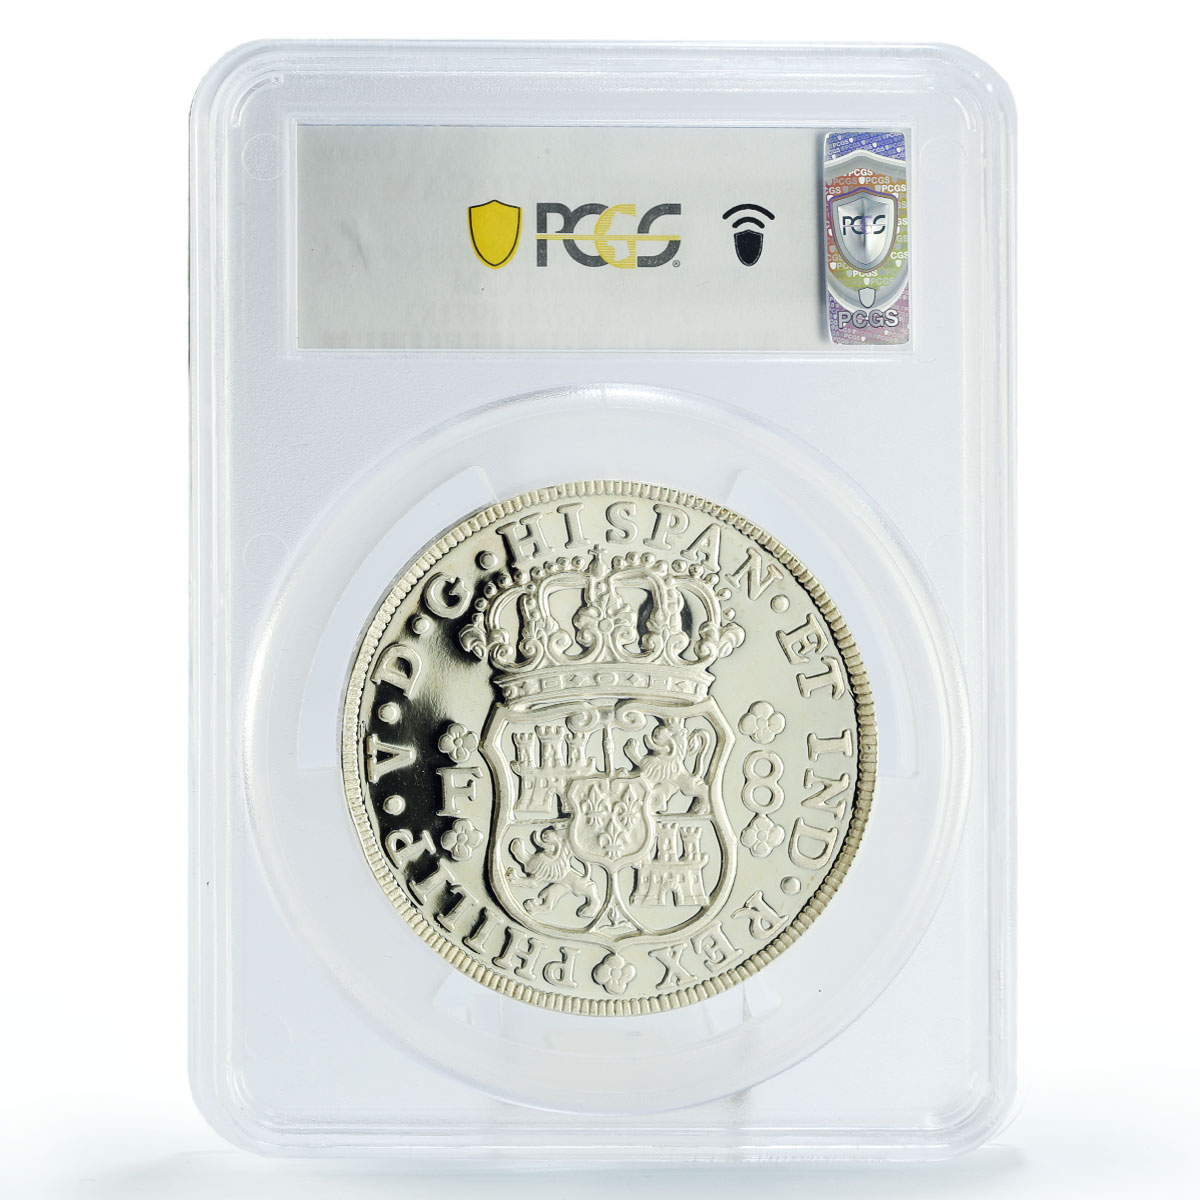 Mexico 5 onzas Numismatic Convention Thailand Marks PR67 PCGS silver coin 1987